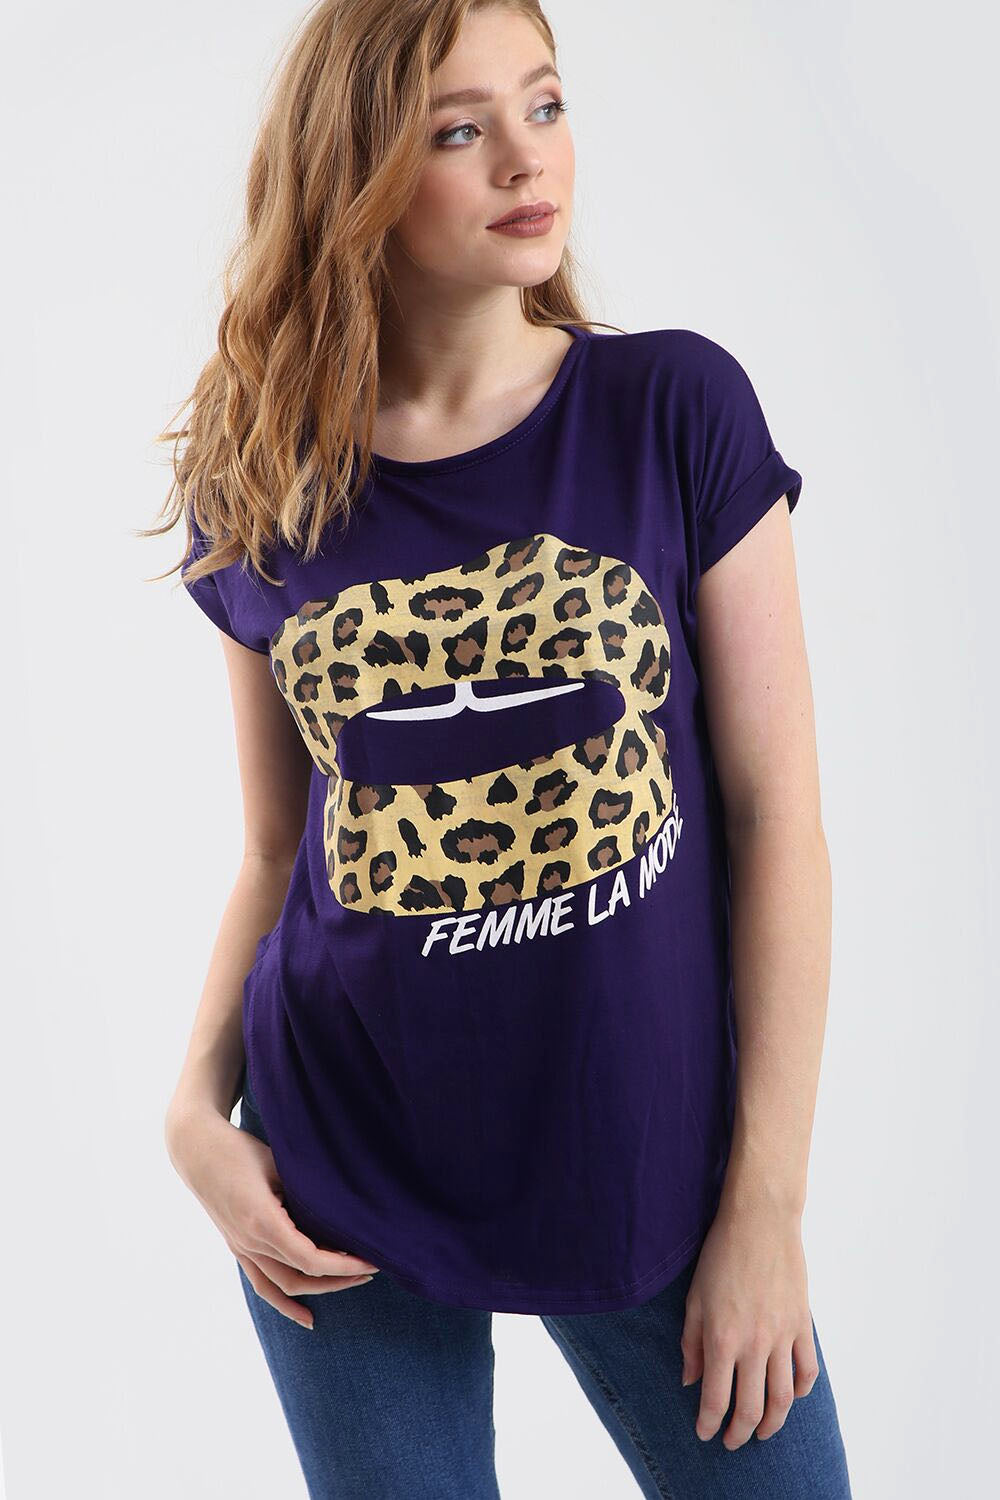 Graphic Print Leopard Print Curve Hem Tshirt - bejealous-com